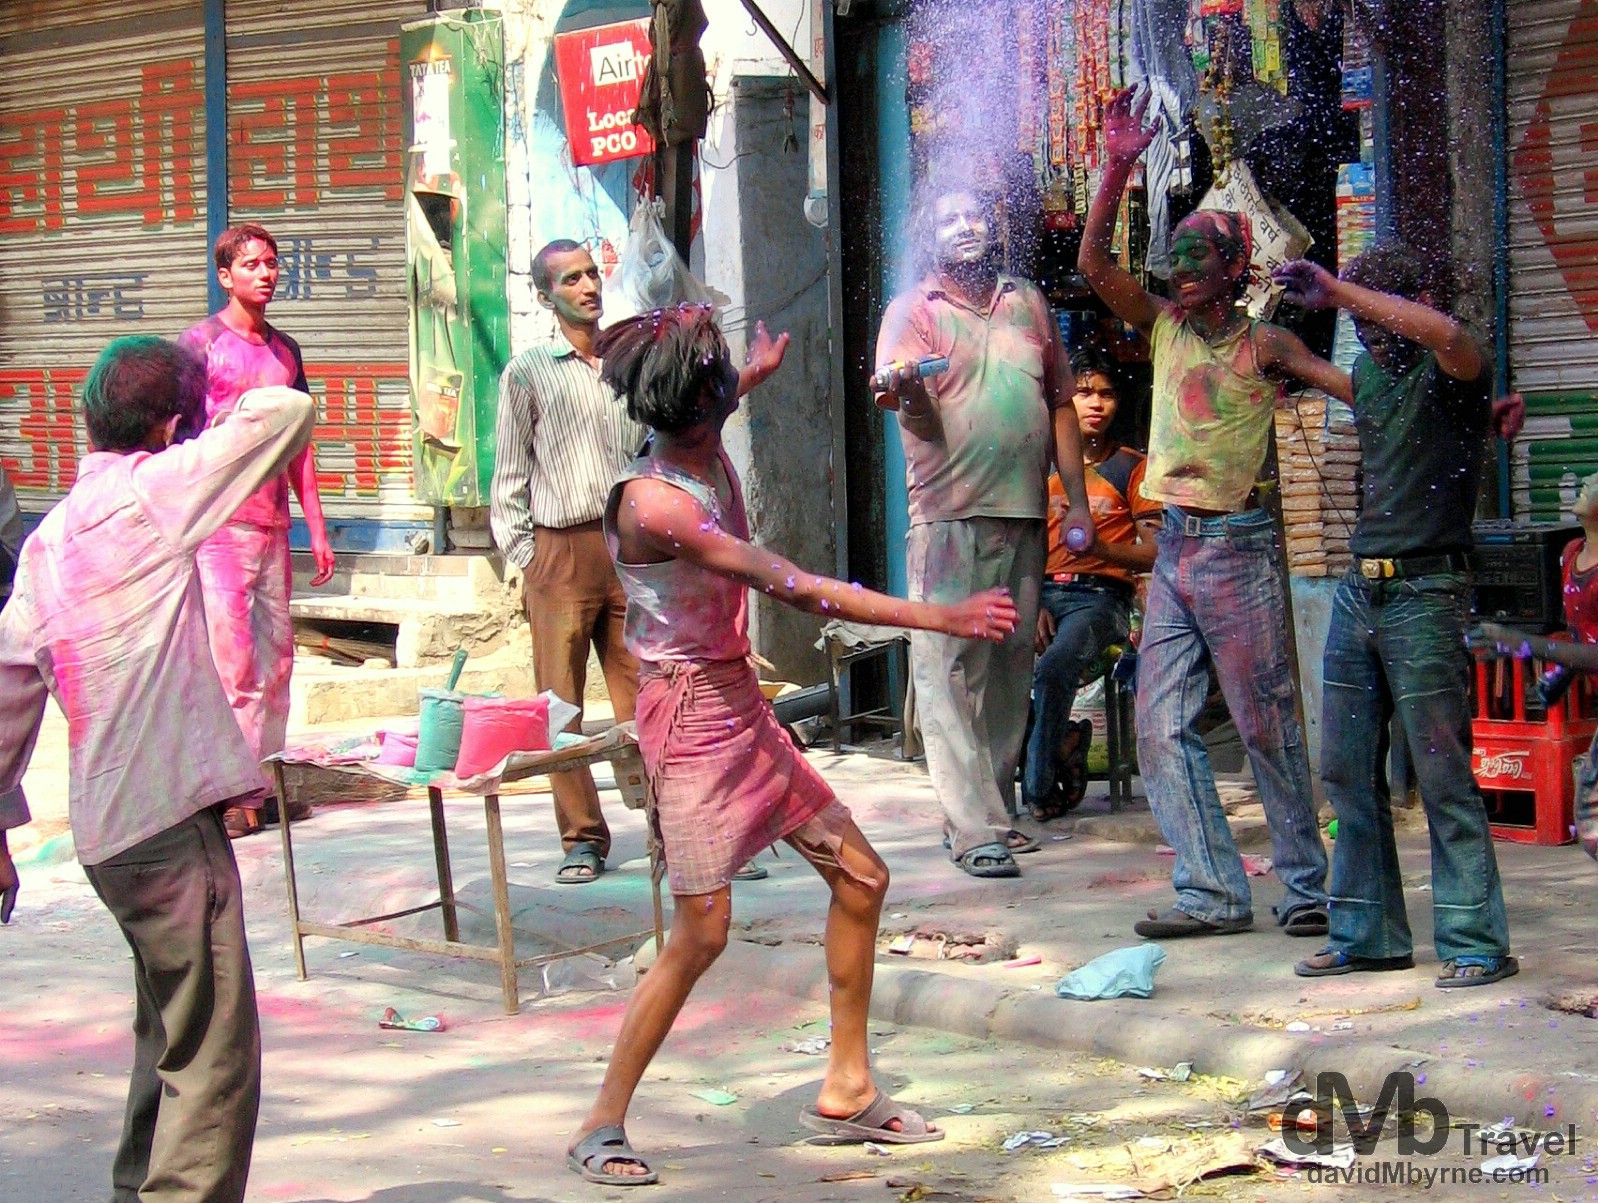 Indians enjoying the Hindu Colour Festival on the Main Bazaar of Paharganj. Delhi, India. March 22, 2008.